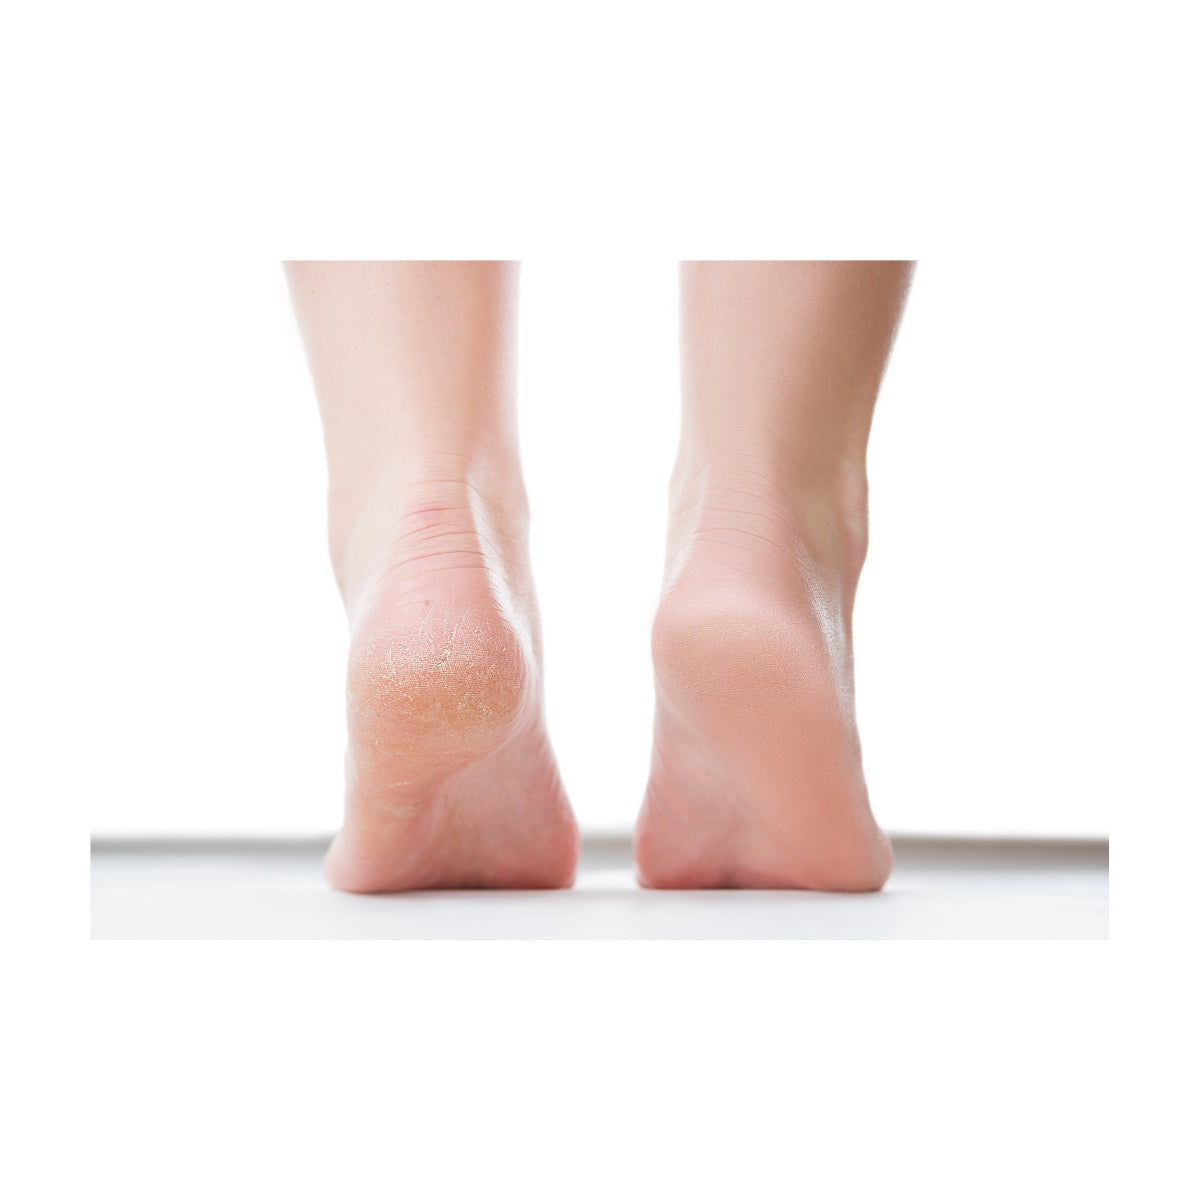 One cracked foot heel one smooth foot heel before and after Baby Foot Foot peel Dermal Essentials Medical Grade Skincare